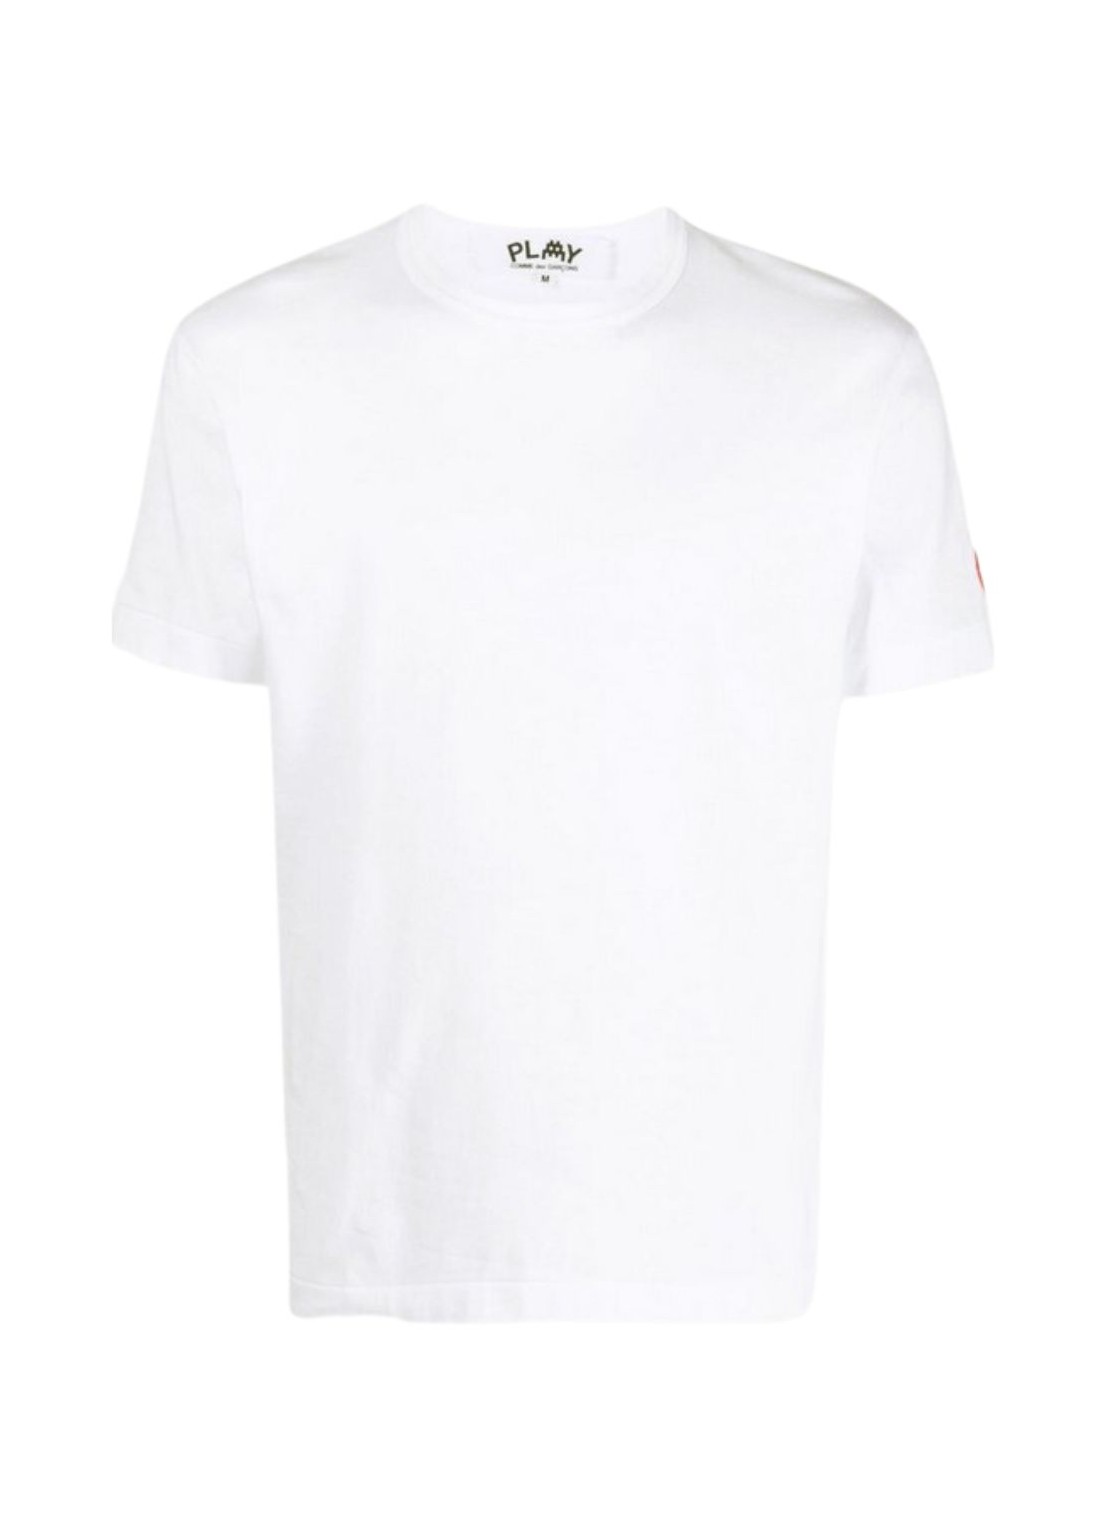 Camiseta comme des garcons t-shirt man mens t-shirt p1t328 white talla blanco
 